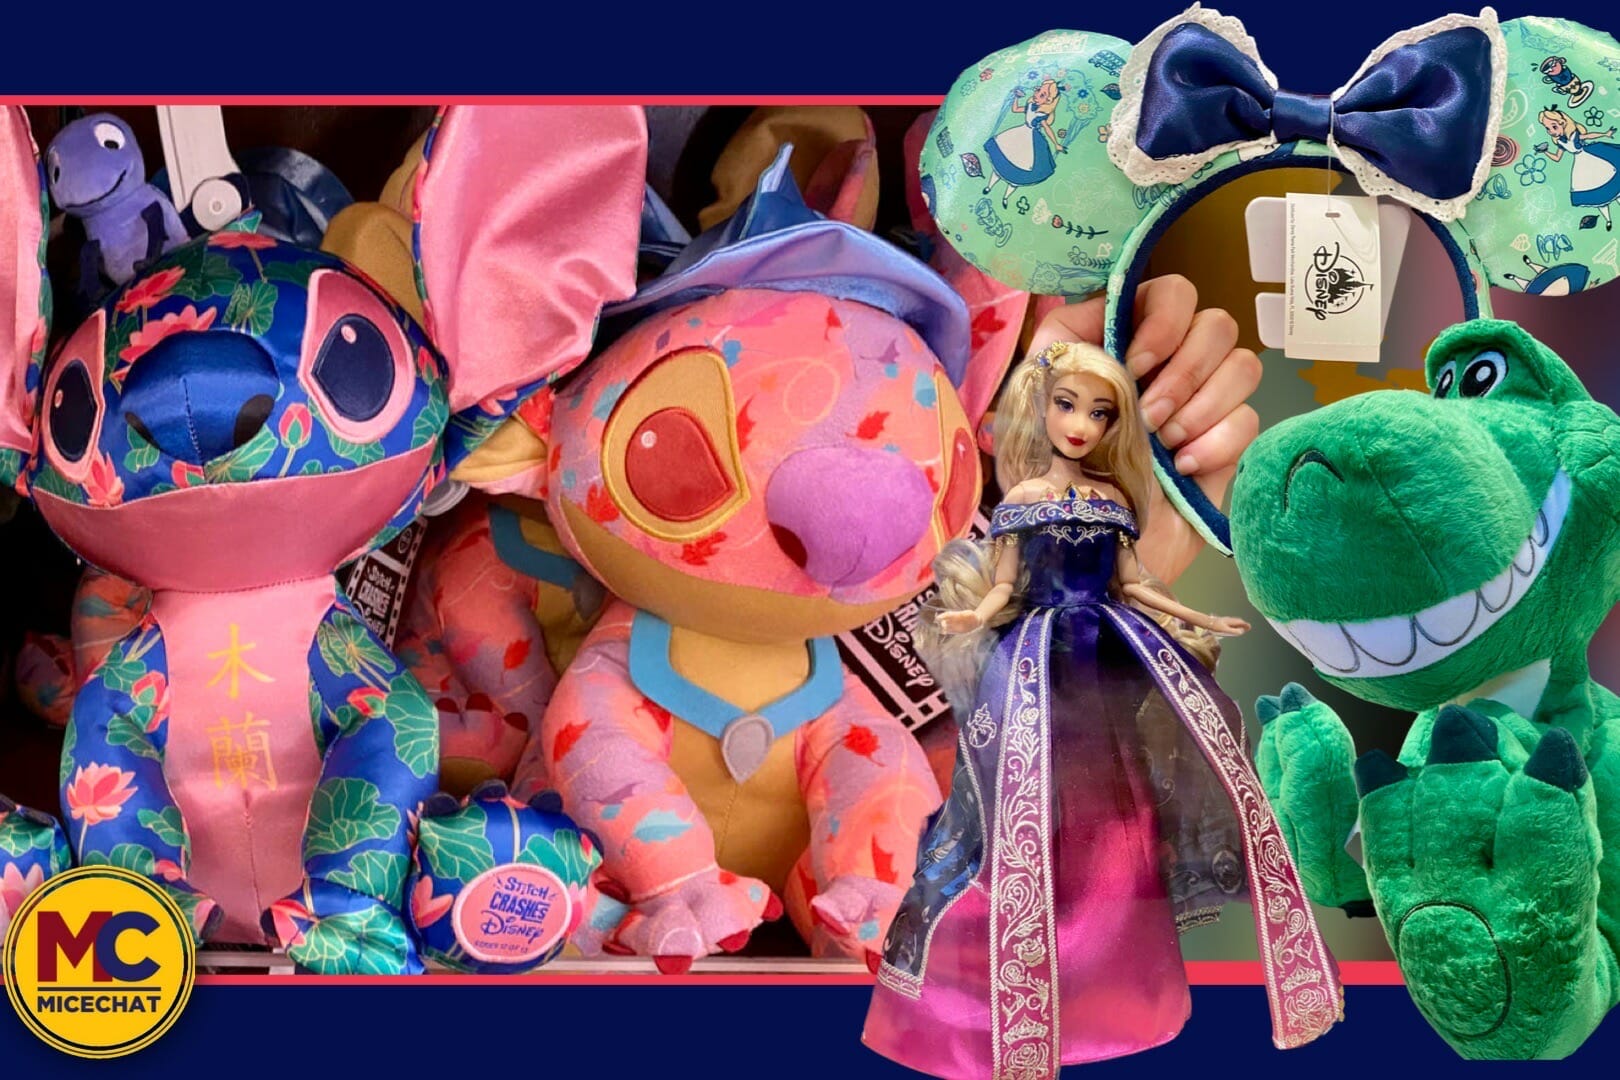 Disney Stitch Easter basket! We made for her 2015